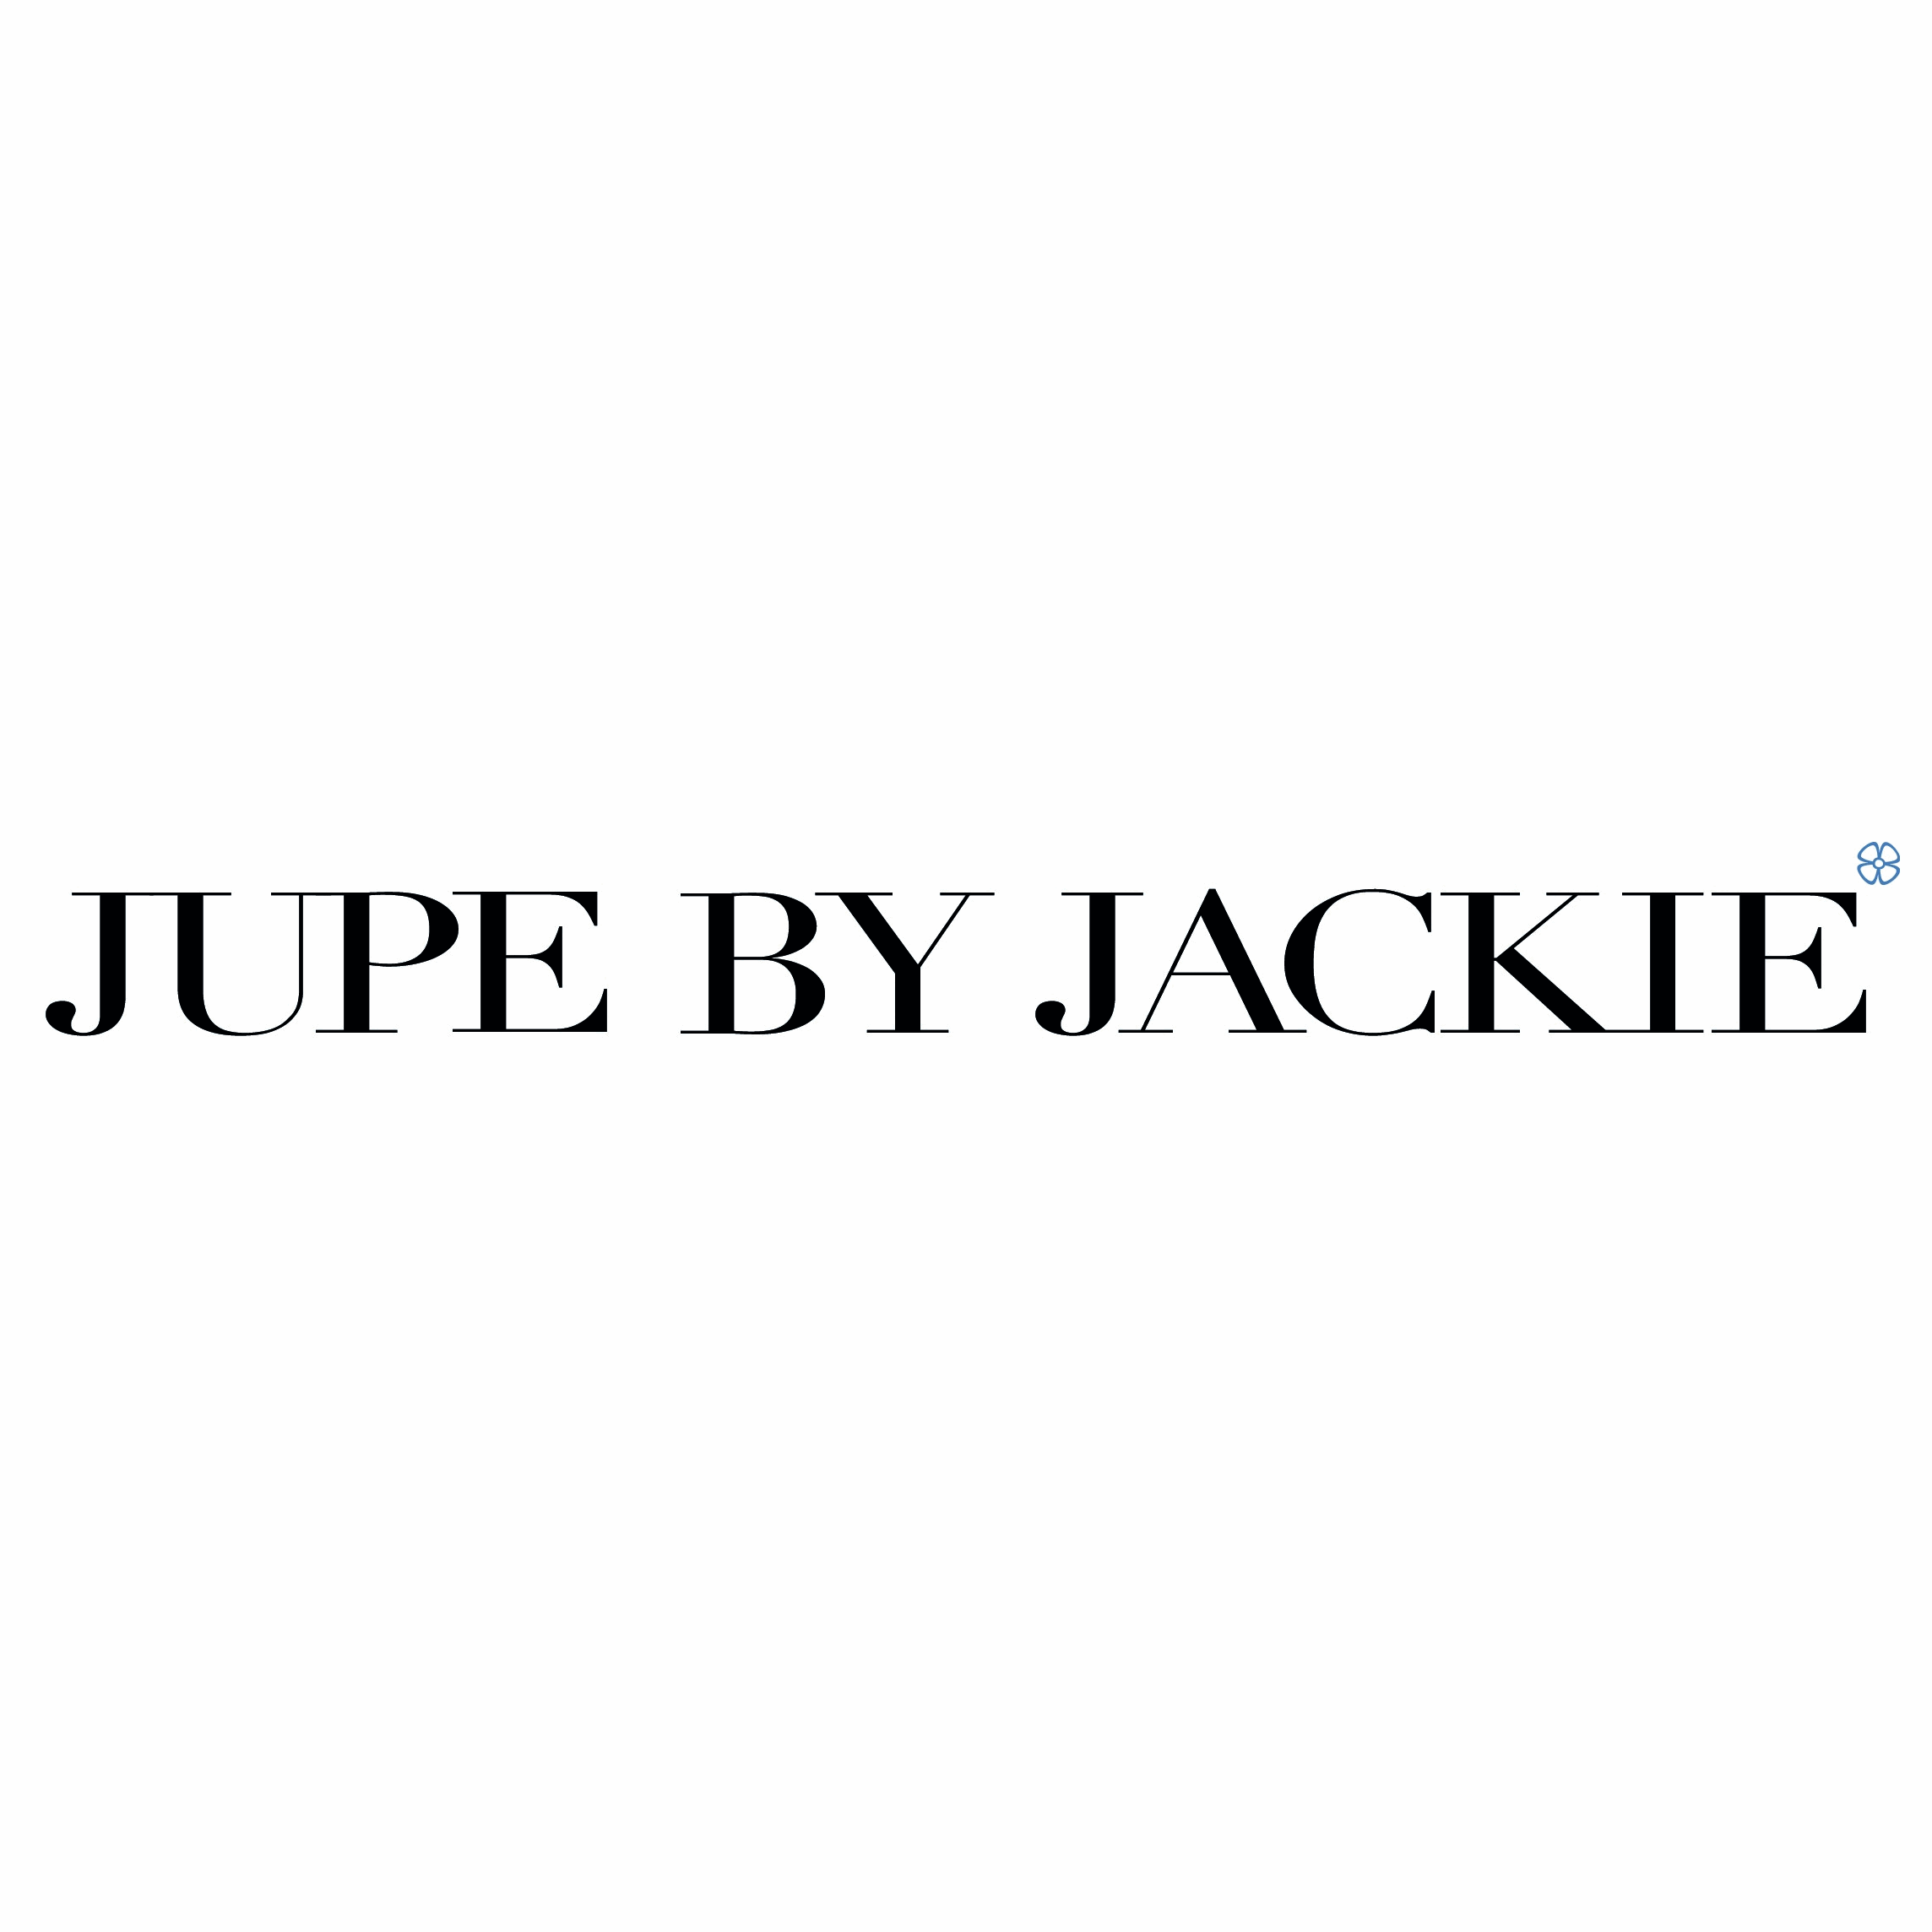 Jackie Logo - Jupe